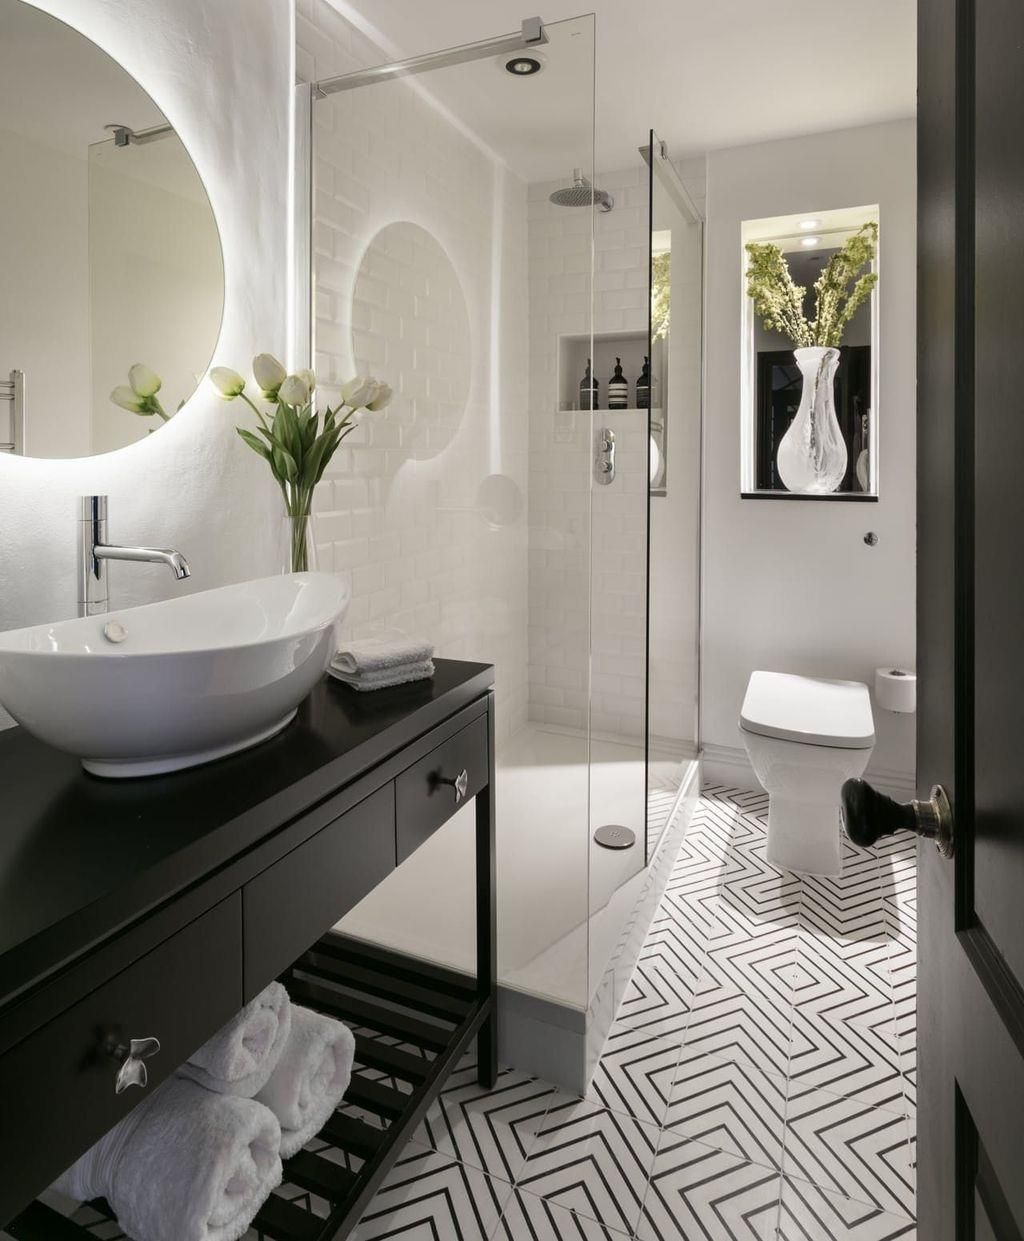 49 Simply Black And White Tile Bathroom Decor Ideas Design Black